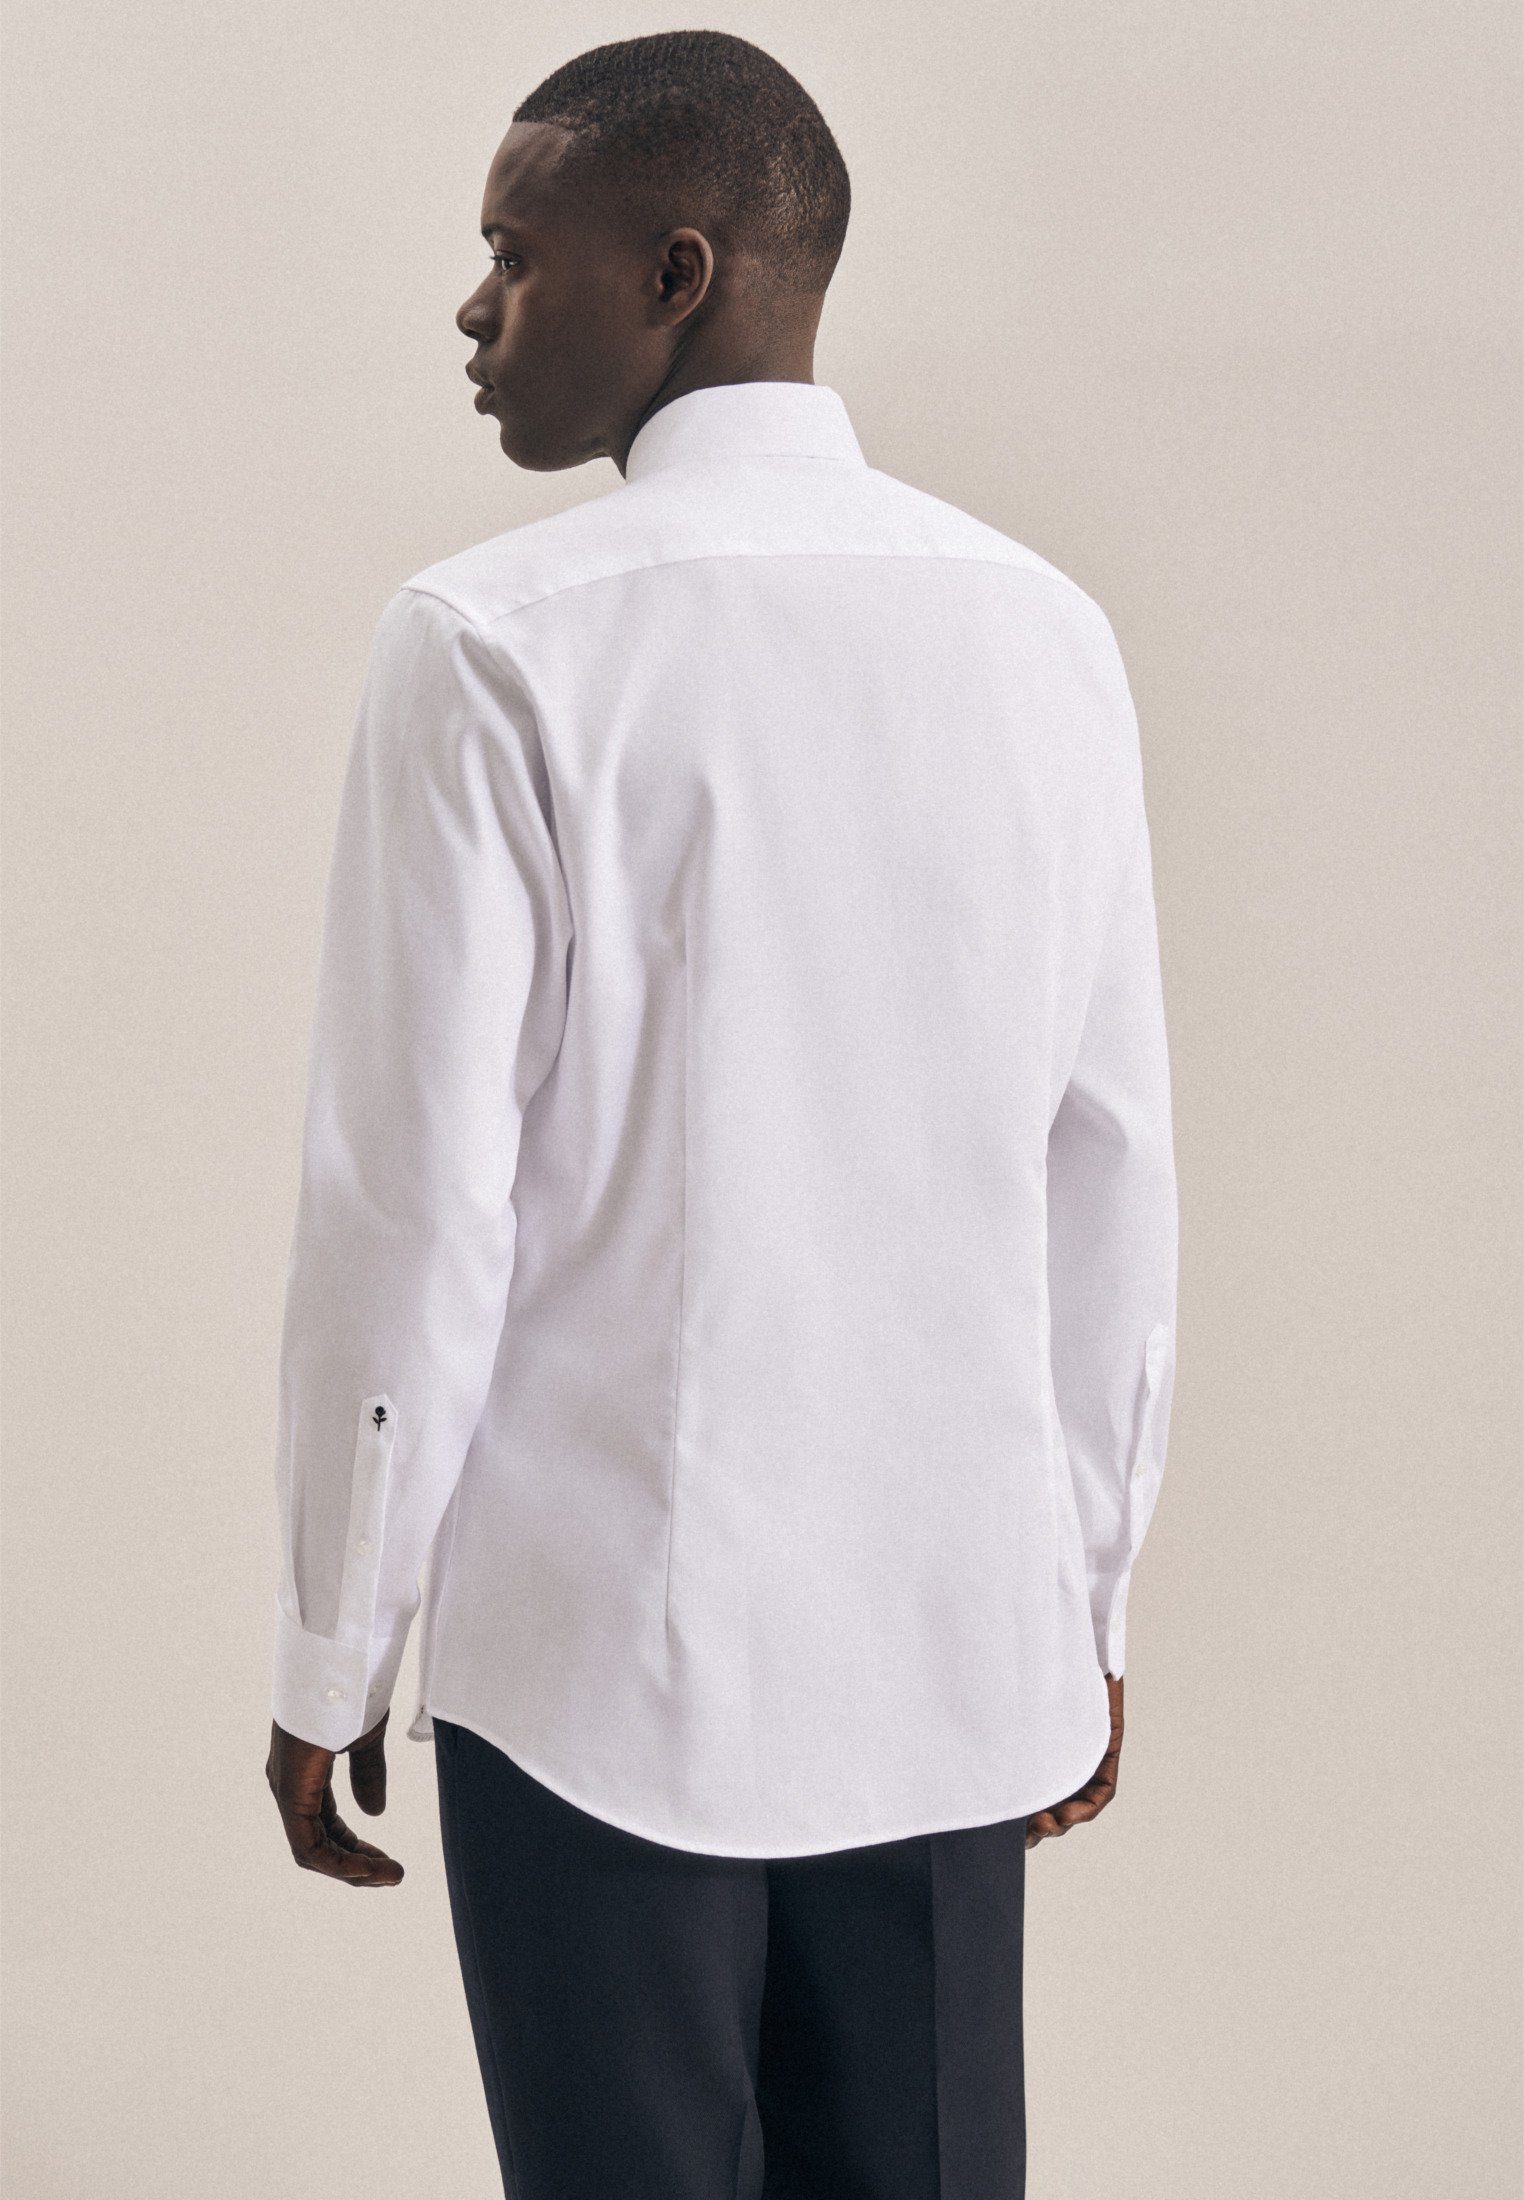 Kentkragen seidensticker Weiß Uni Langarm Businesshemd Shaped Shaped